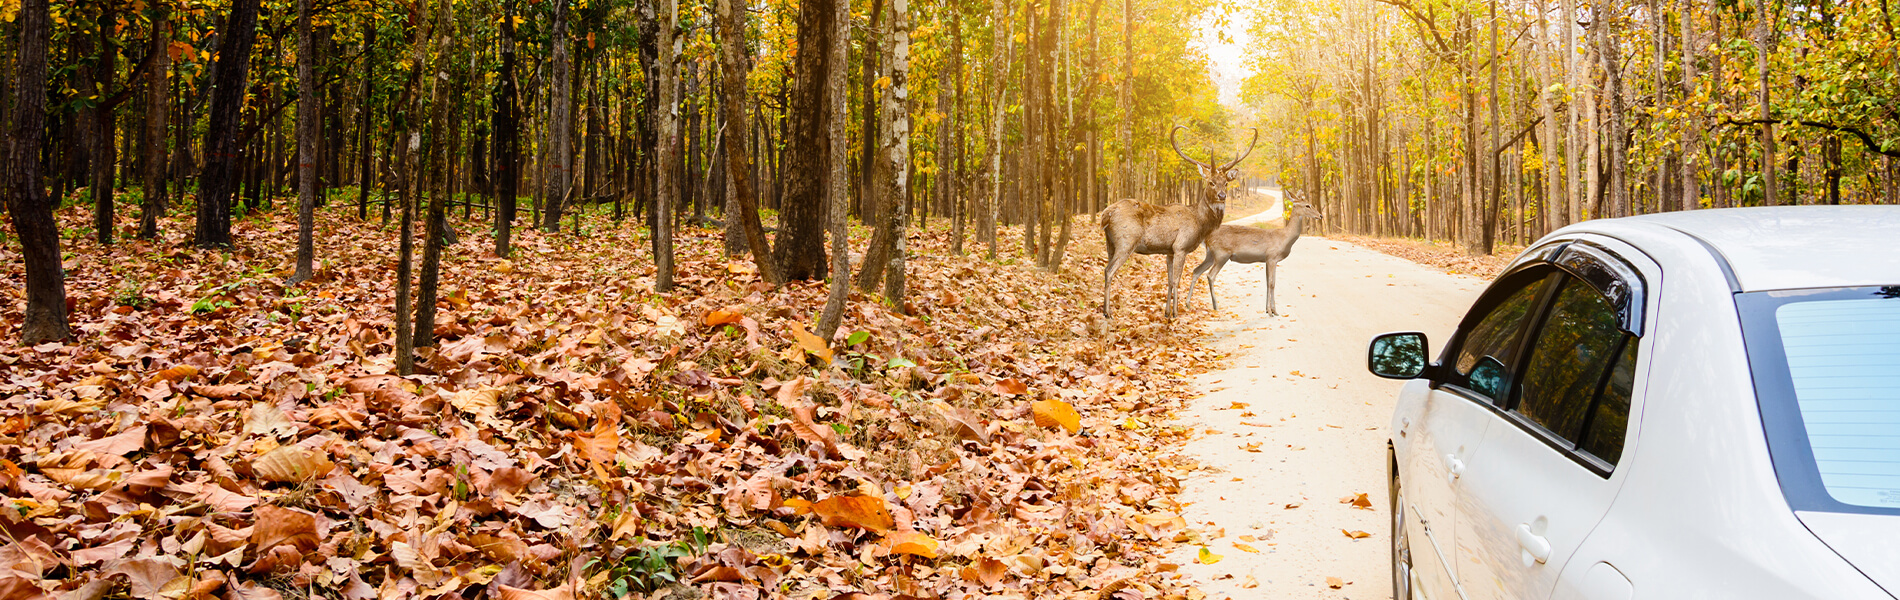 Deer on road in autumn